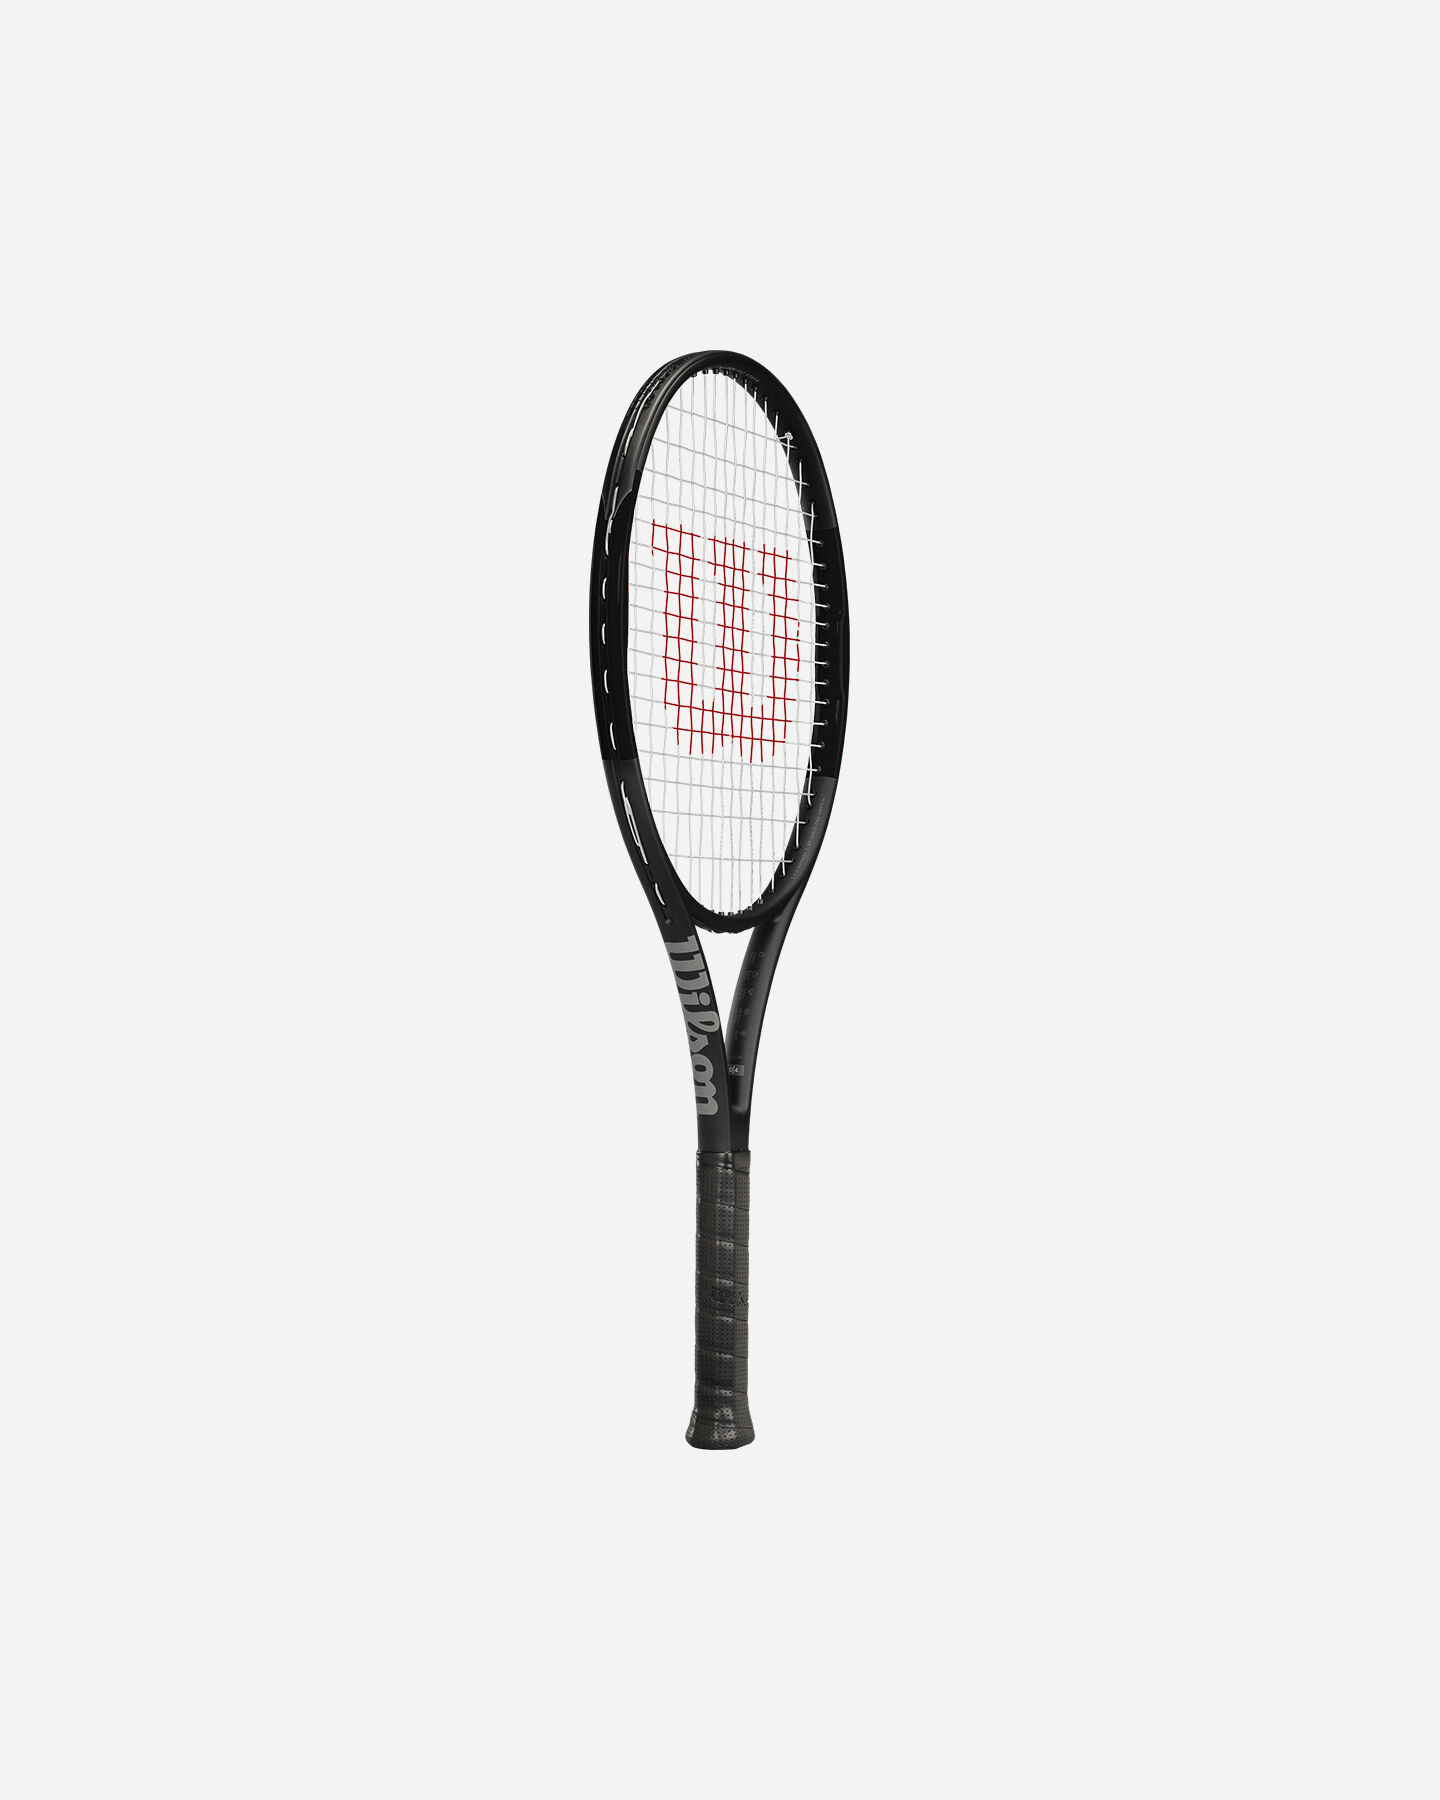  Racchetta tennis WILSON PRO STAFF 26  JR S4007871|GRP/BLK|26 scatto 1